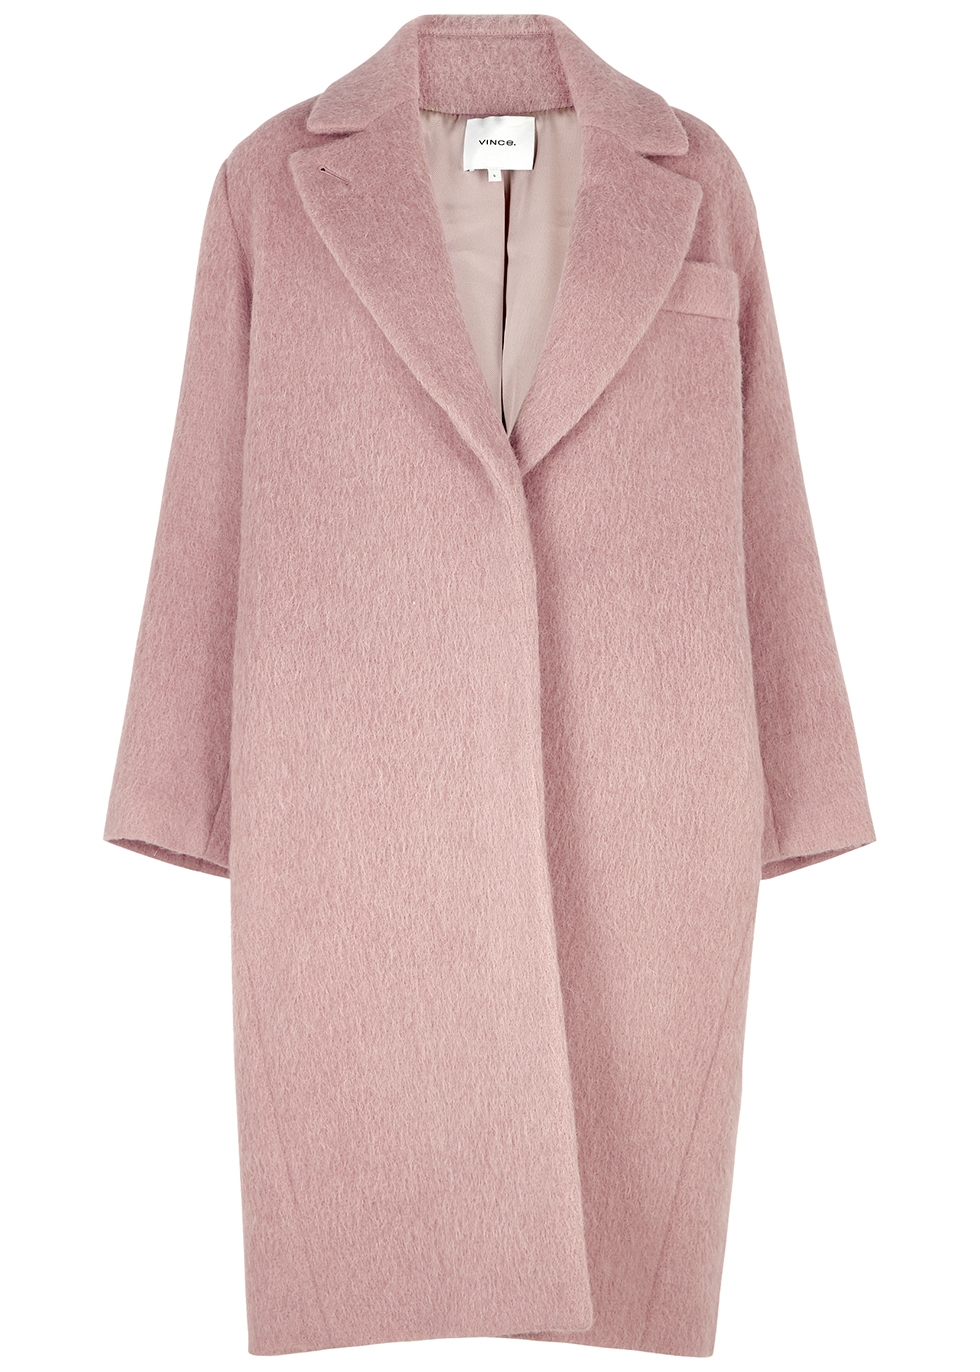 Dusky pink wool-blend coat